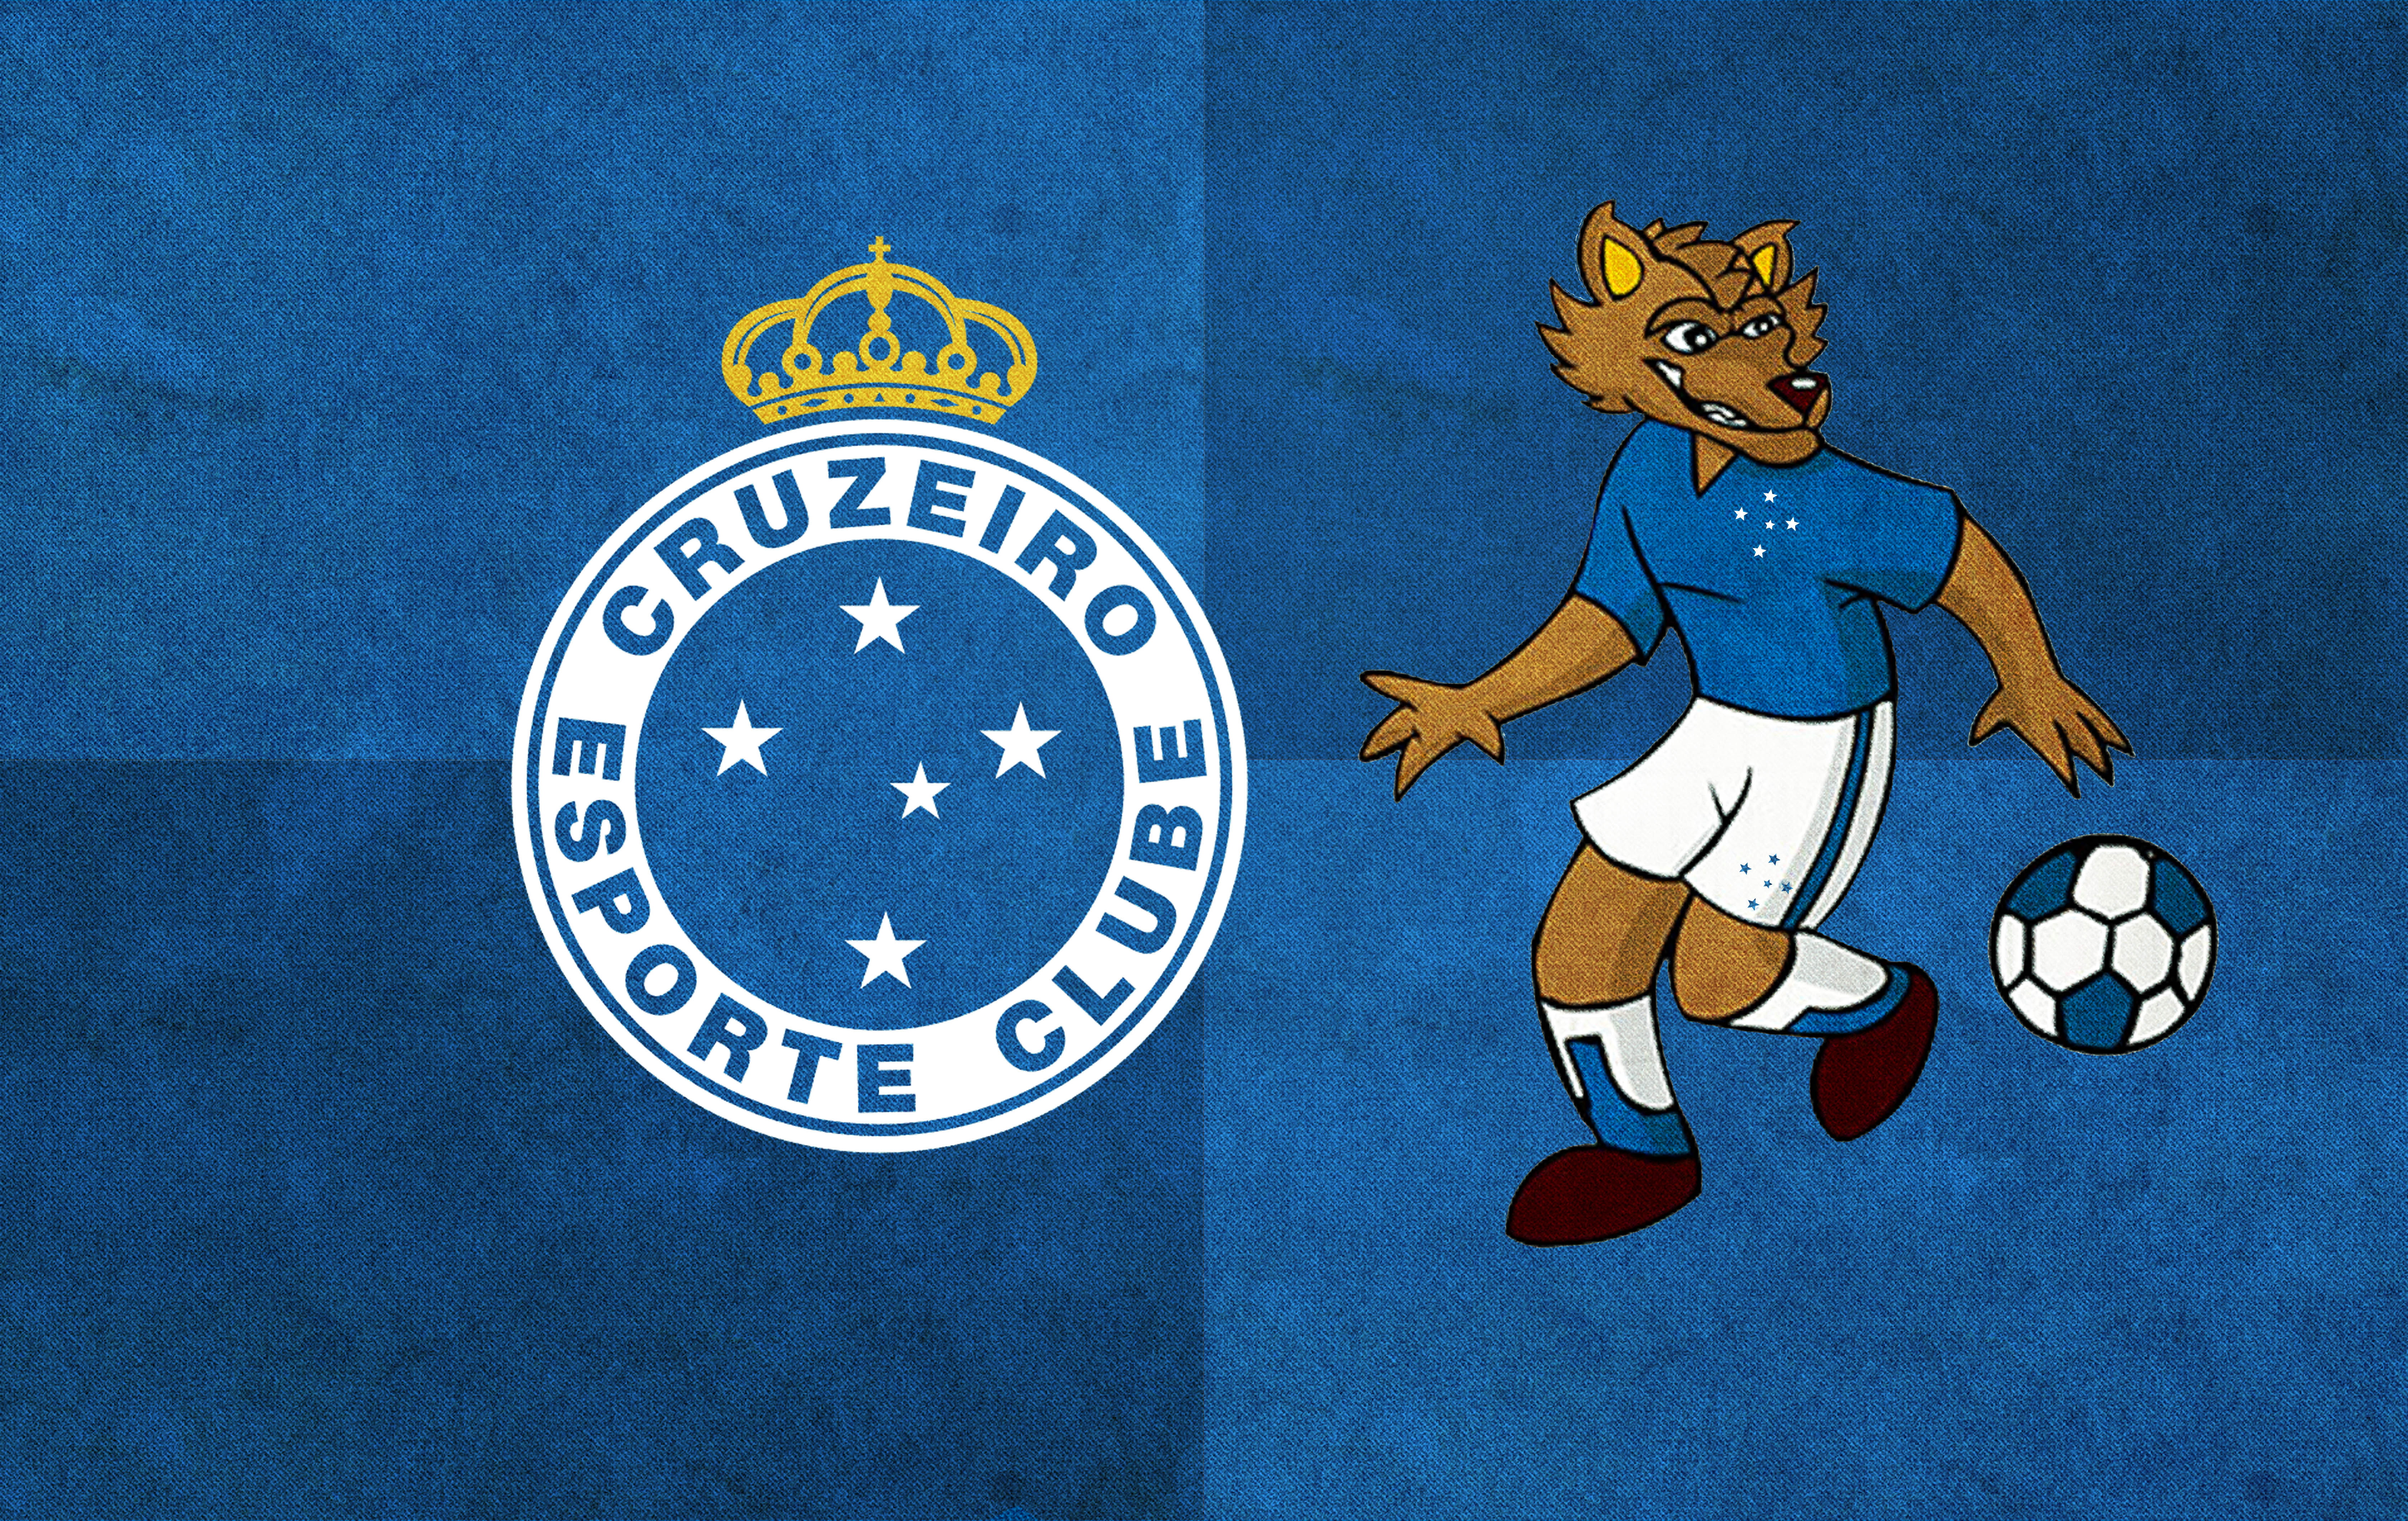 HD Wallpaper Cruzeiro Foxes The Representation No People